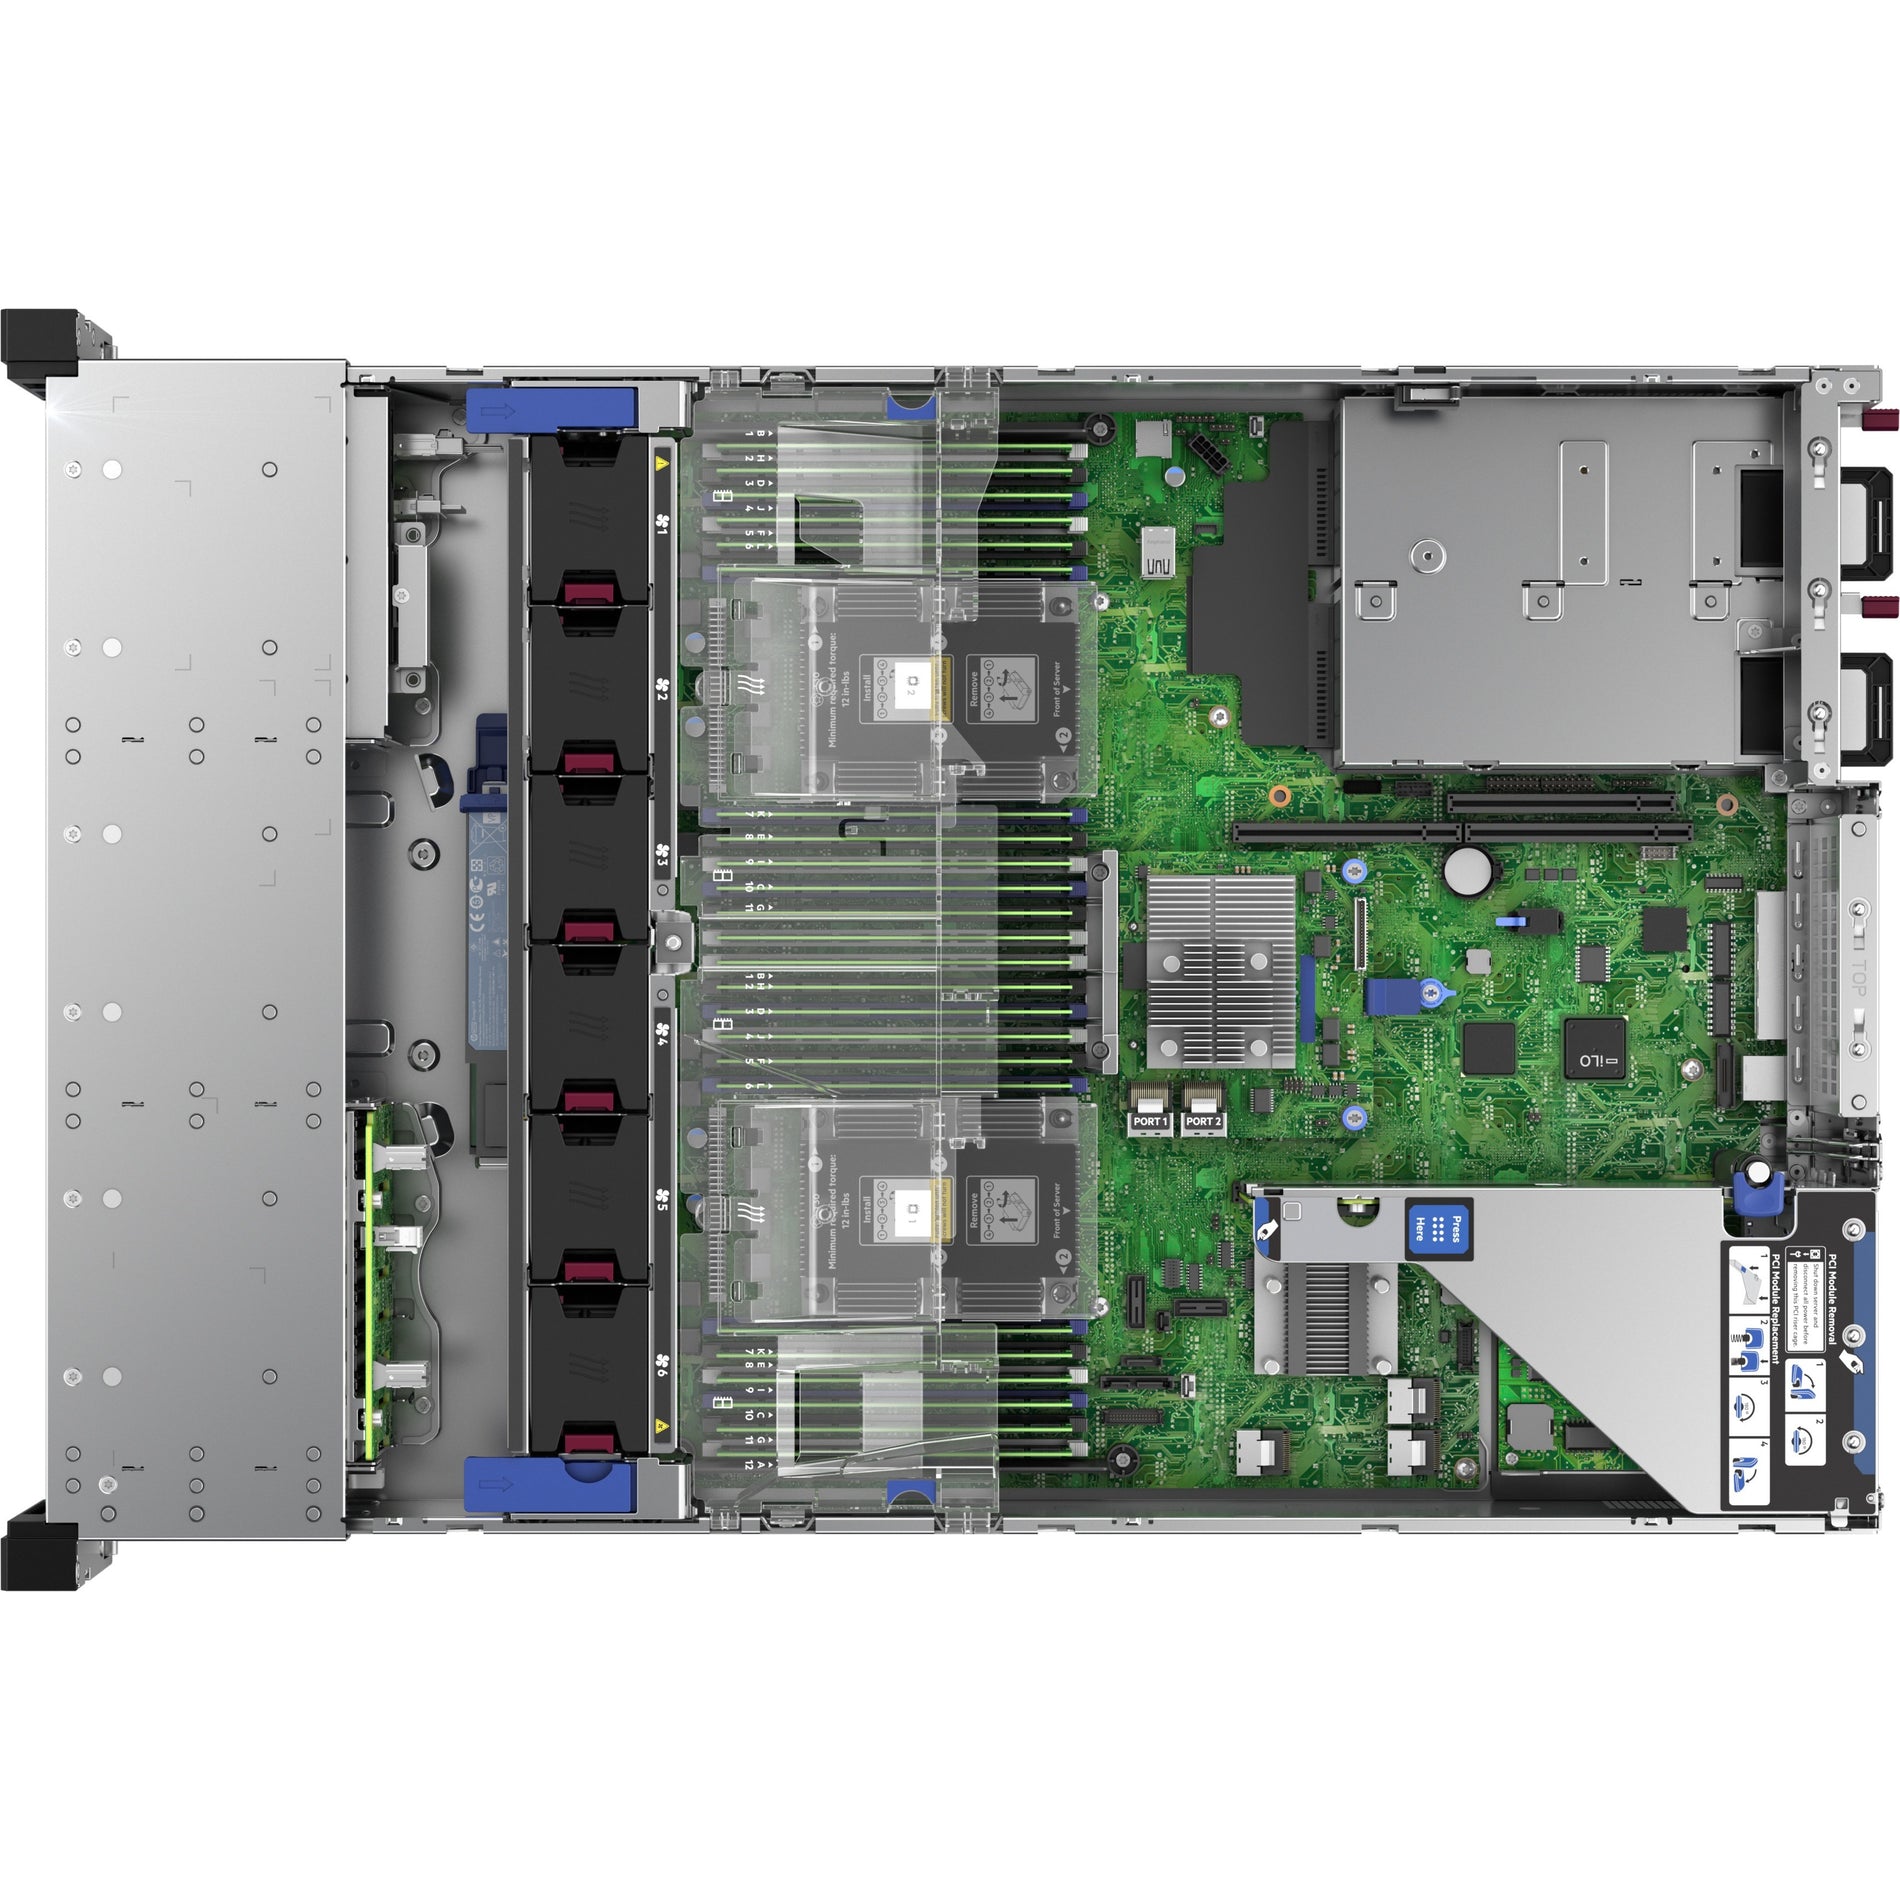 HPE ProLiant DL380 G10 2U Rack Server - Intel Xeon Silver 4208, 32GB RAM, SAS Controller [Discontinued]